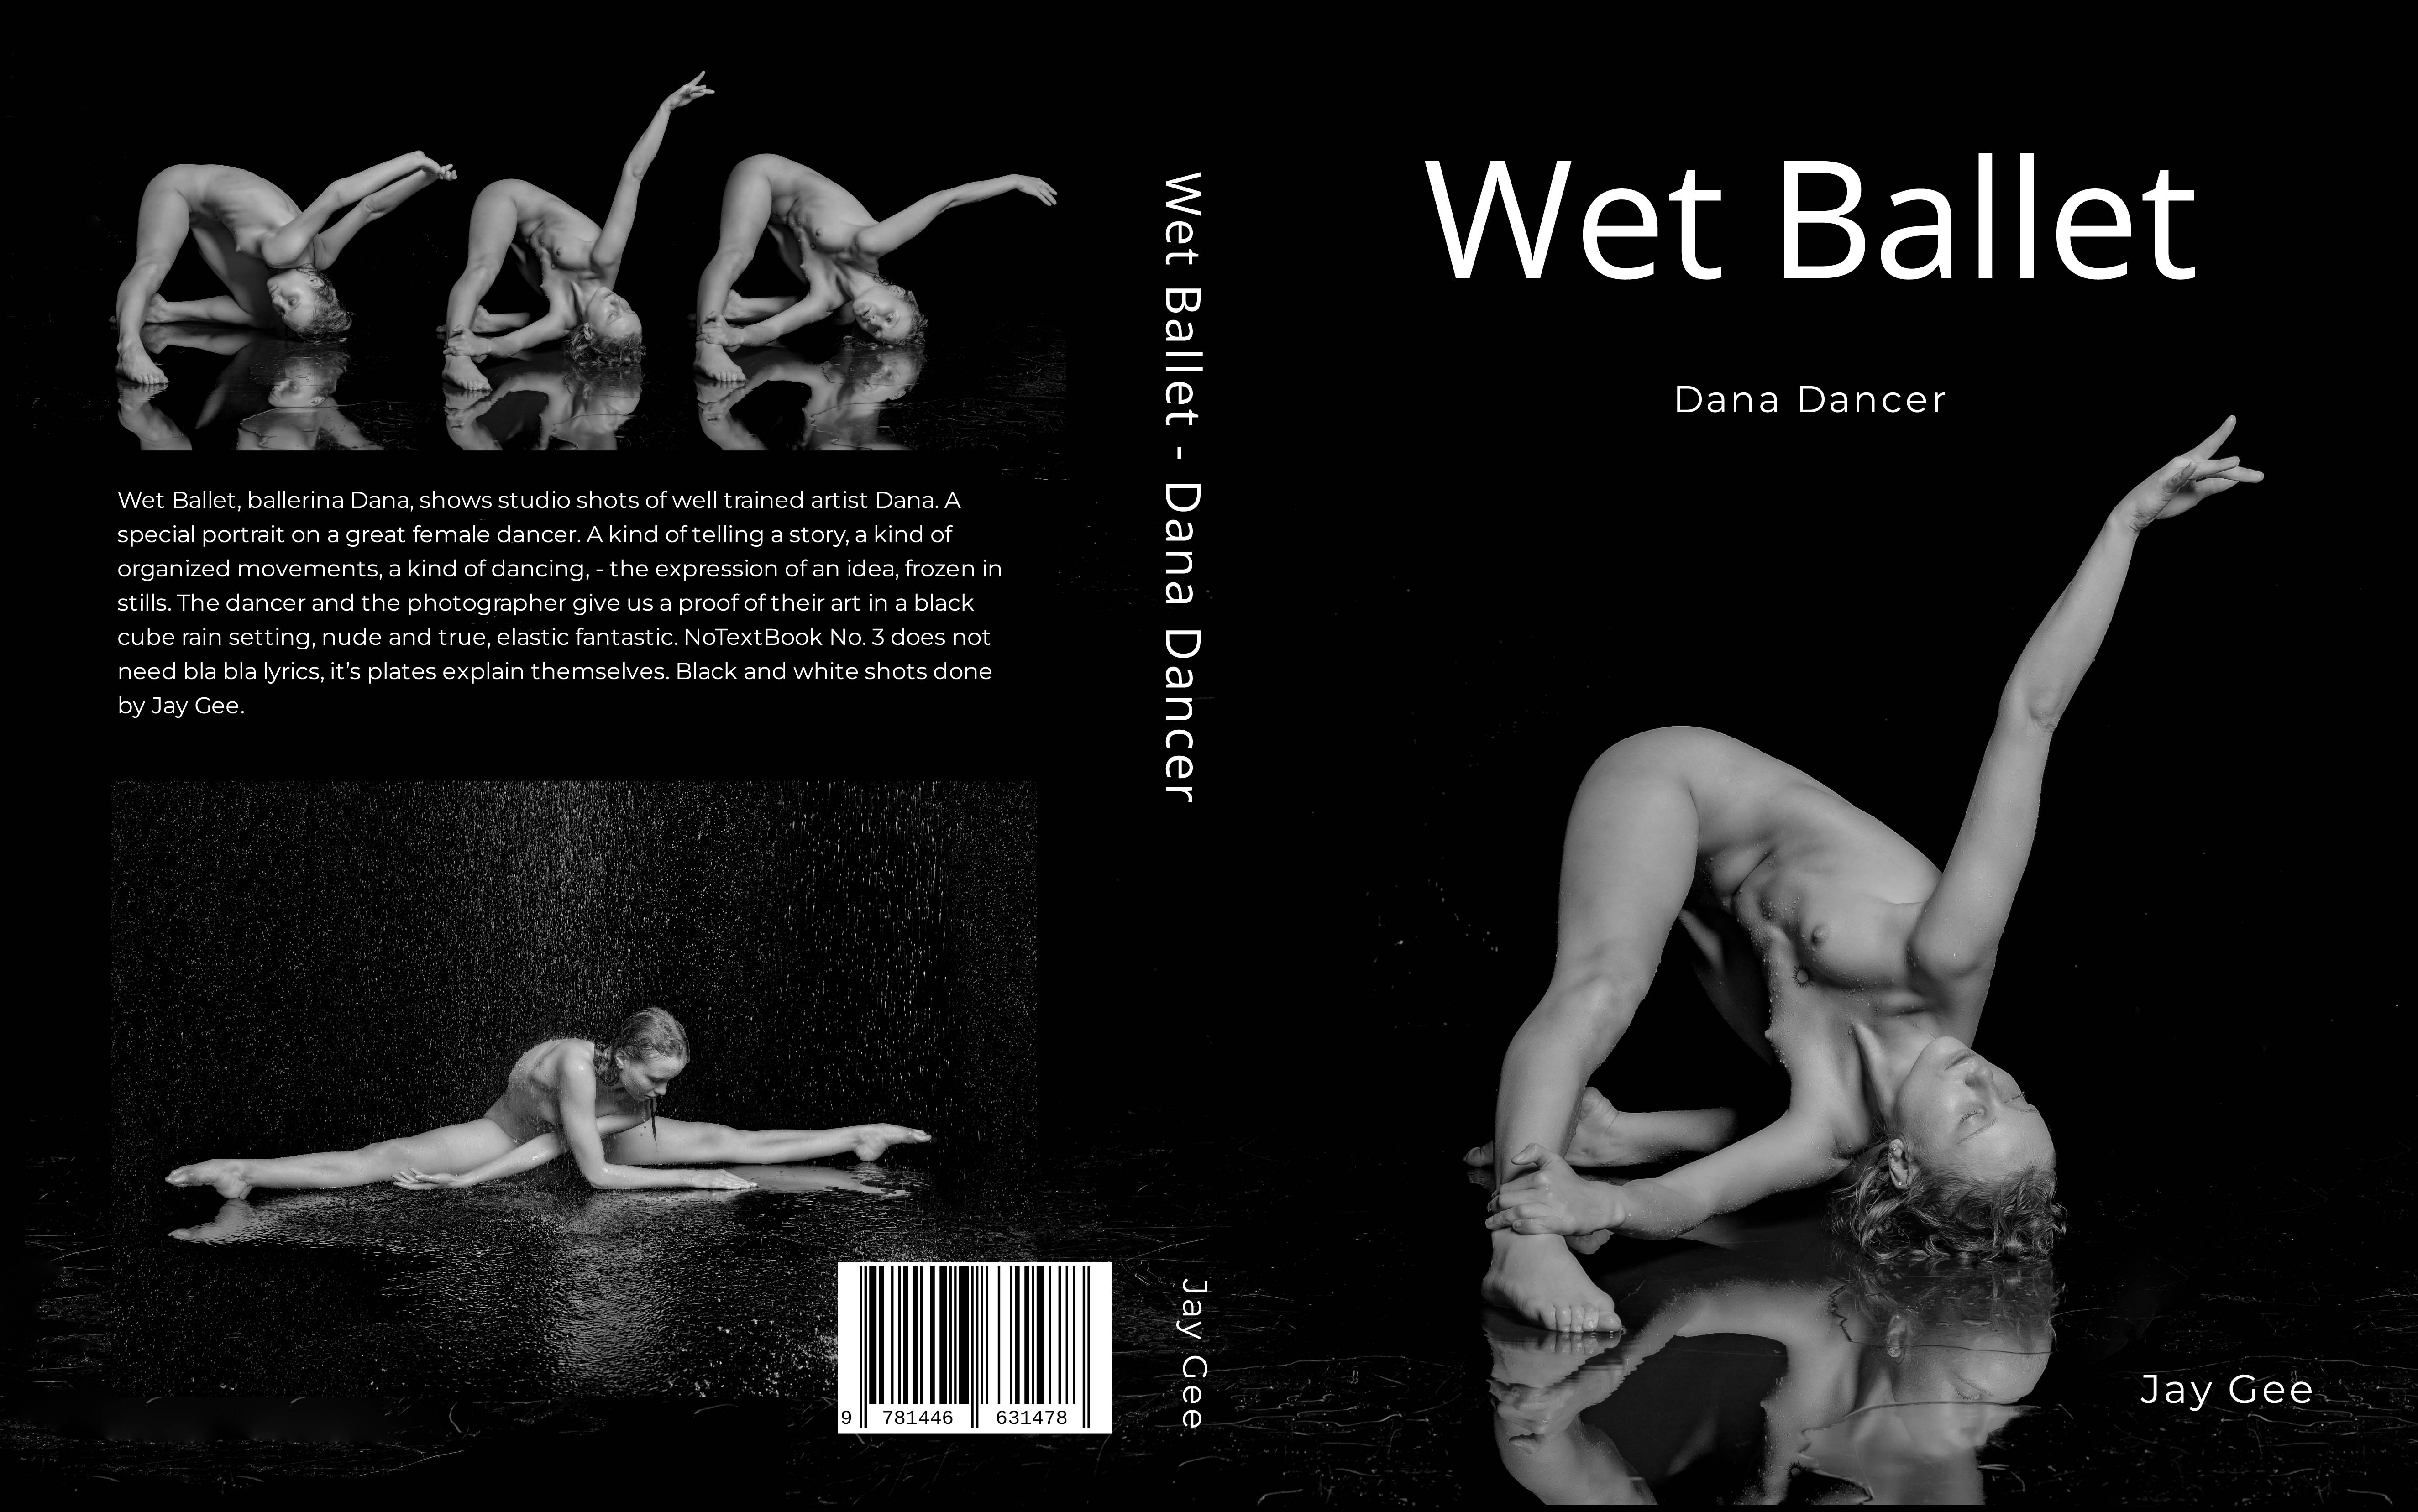 Wet Ballet - Dana Dancer, Photobook, Model: Dana, Photographer Jay Gee. Production: Erotic Art Photography EAP